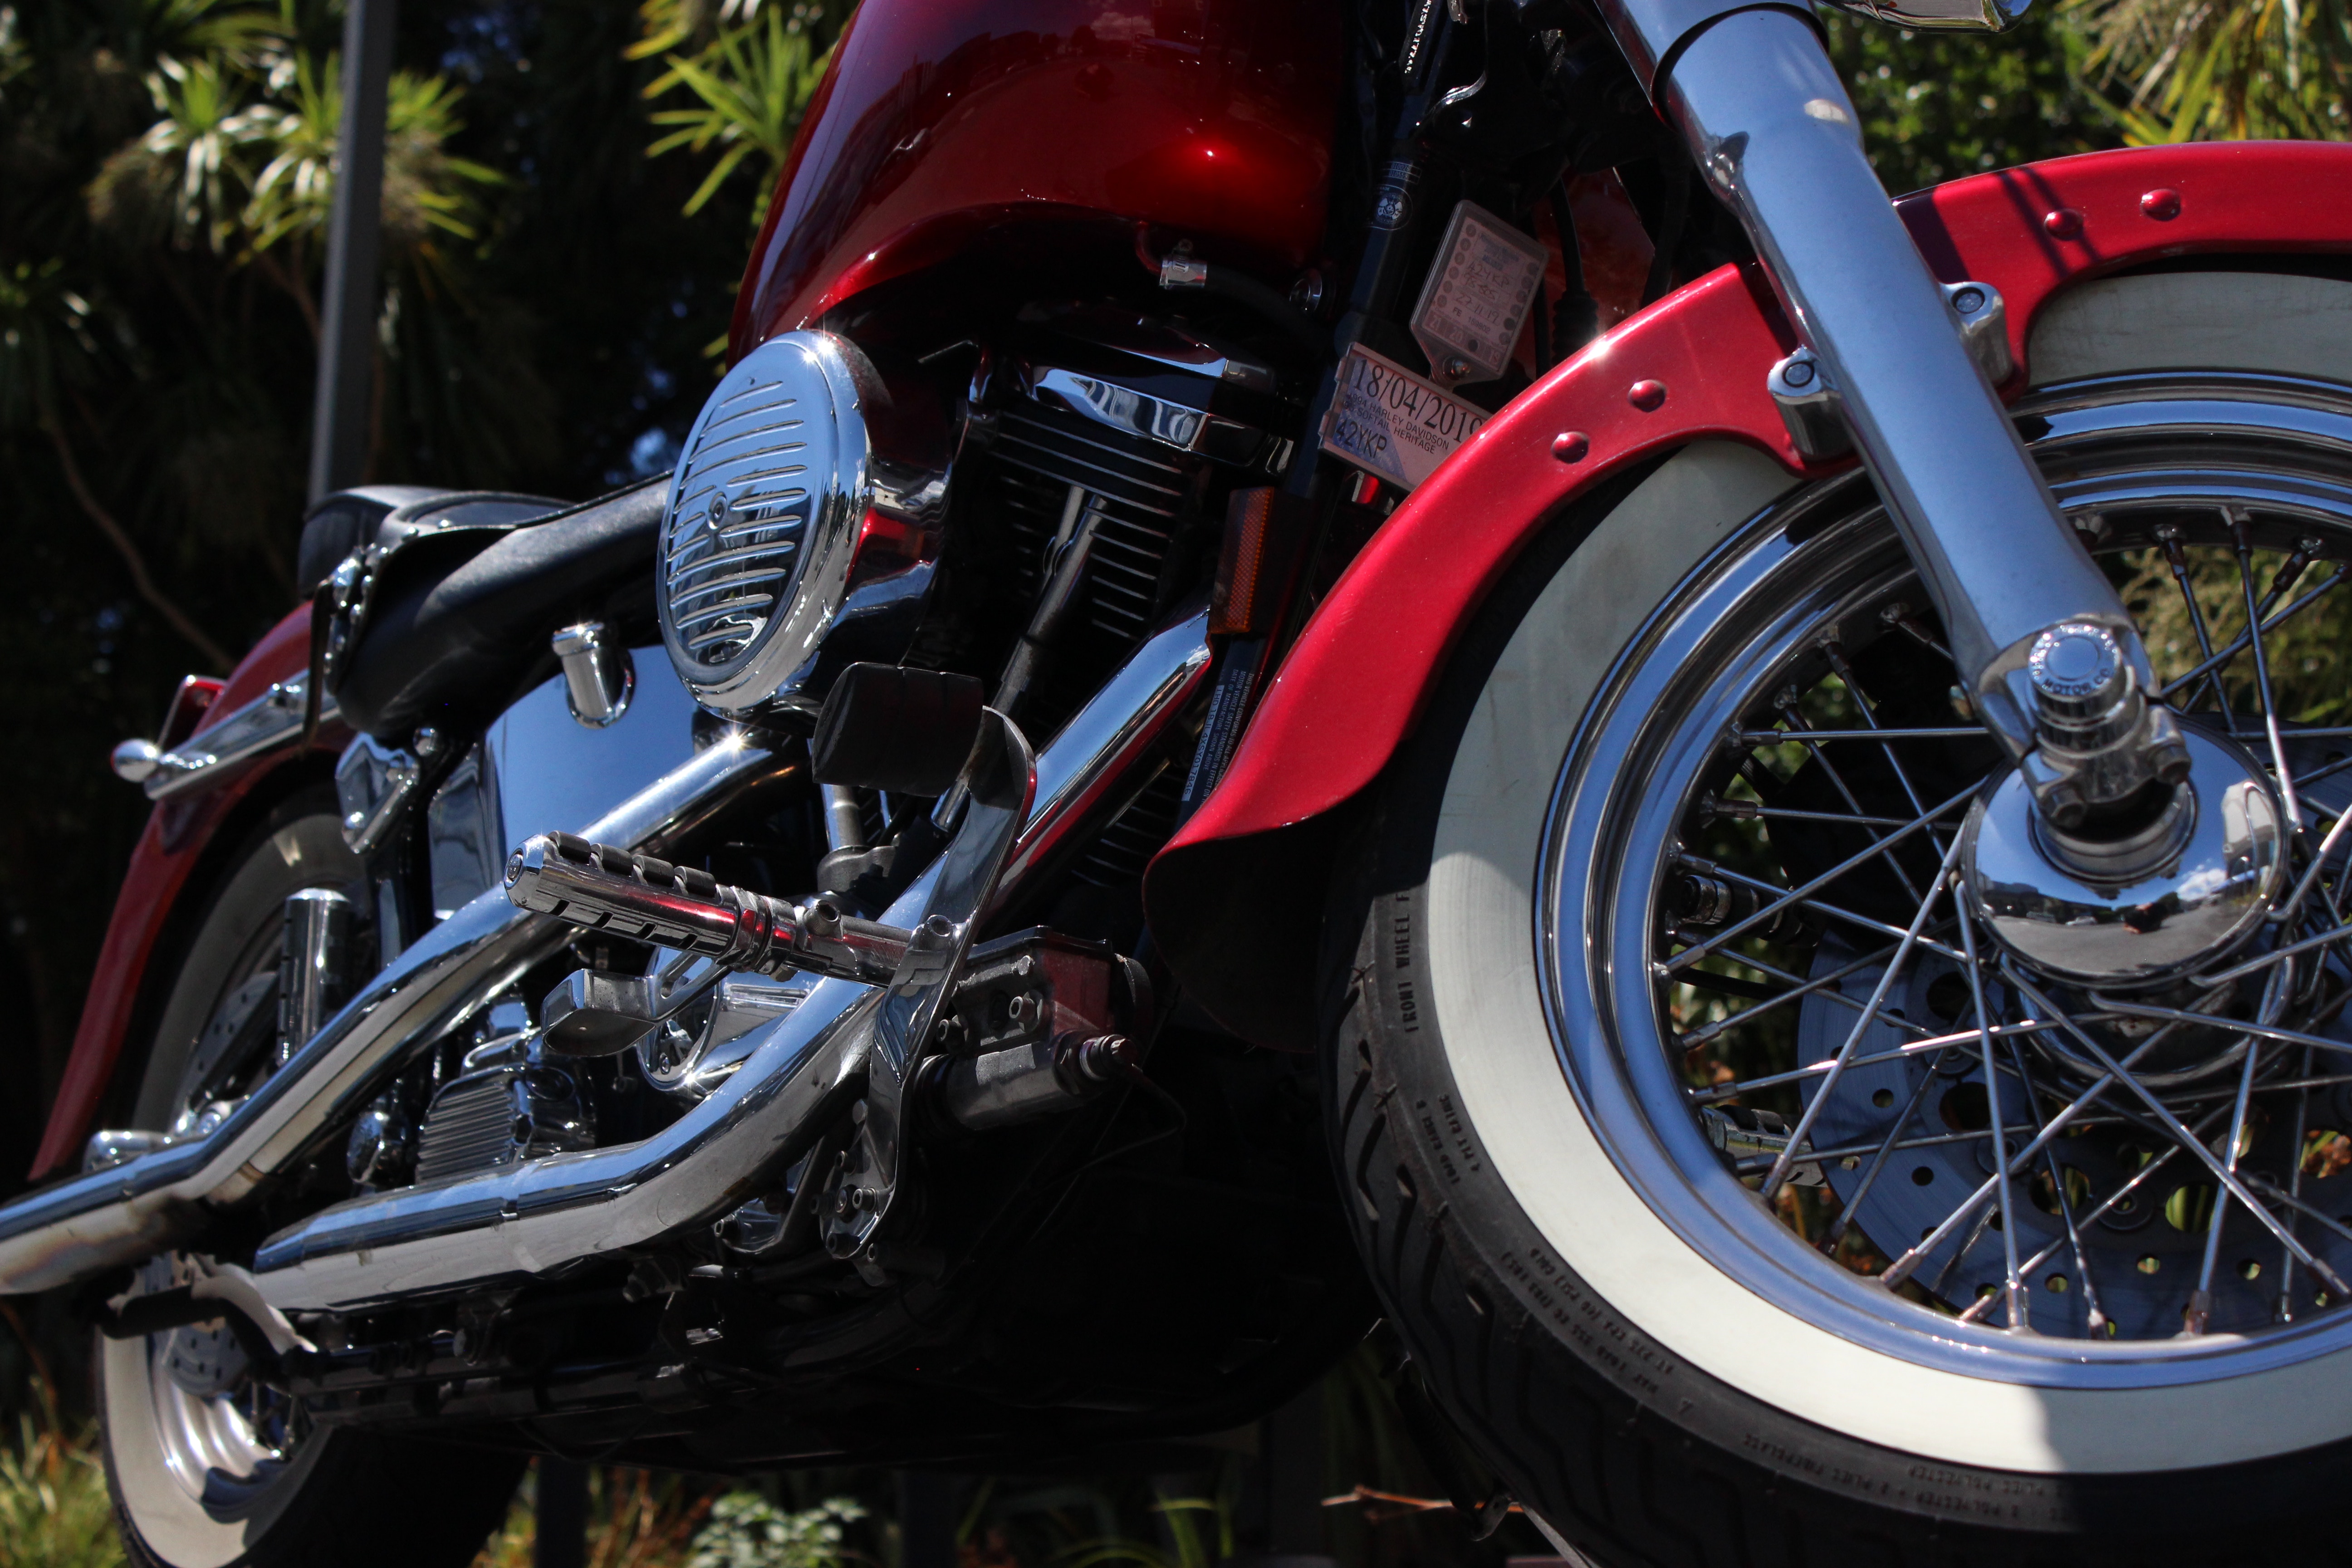 GREMLIN BIKER BELL DEVIL SKULL for HARLEY DAVIDSON Motorcycle guardian spirit